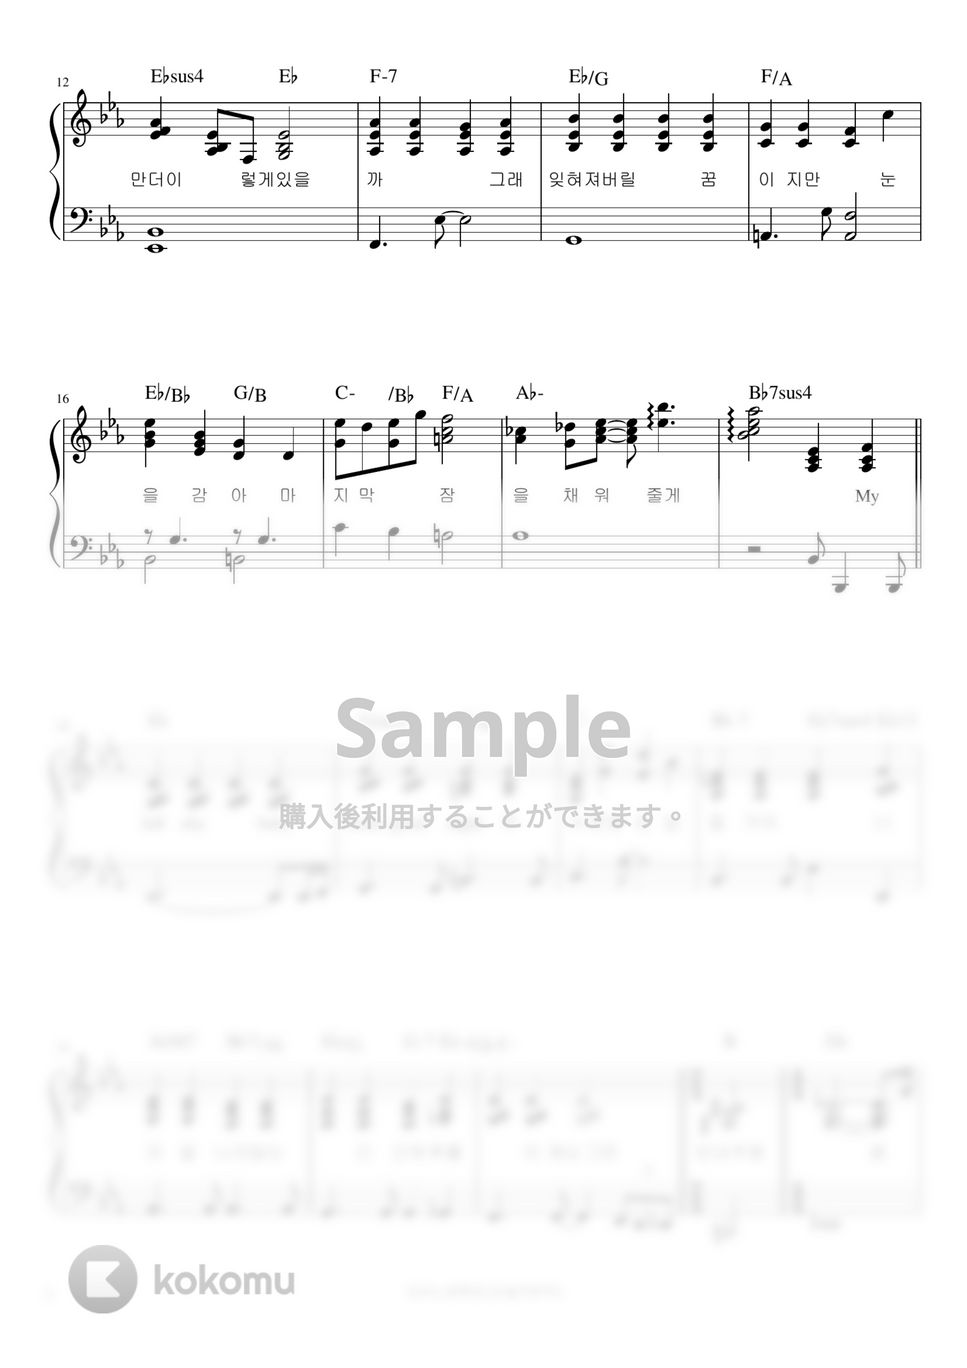 IU - Lullaby (伴奏楽譜) by pianojeongryujang